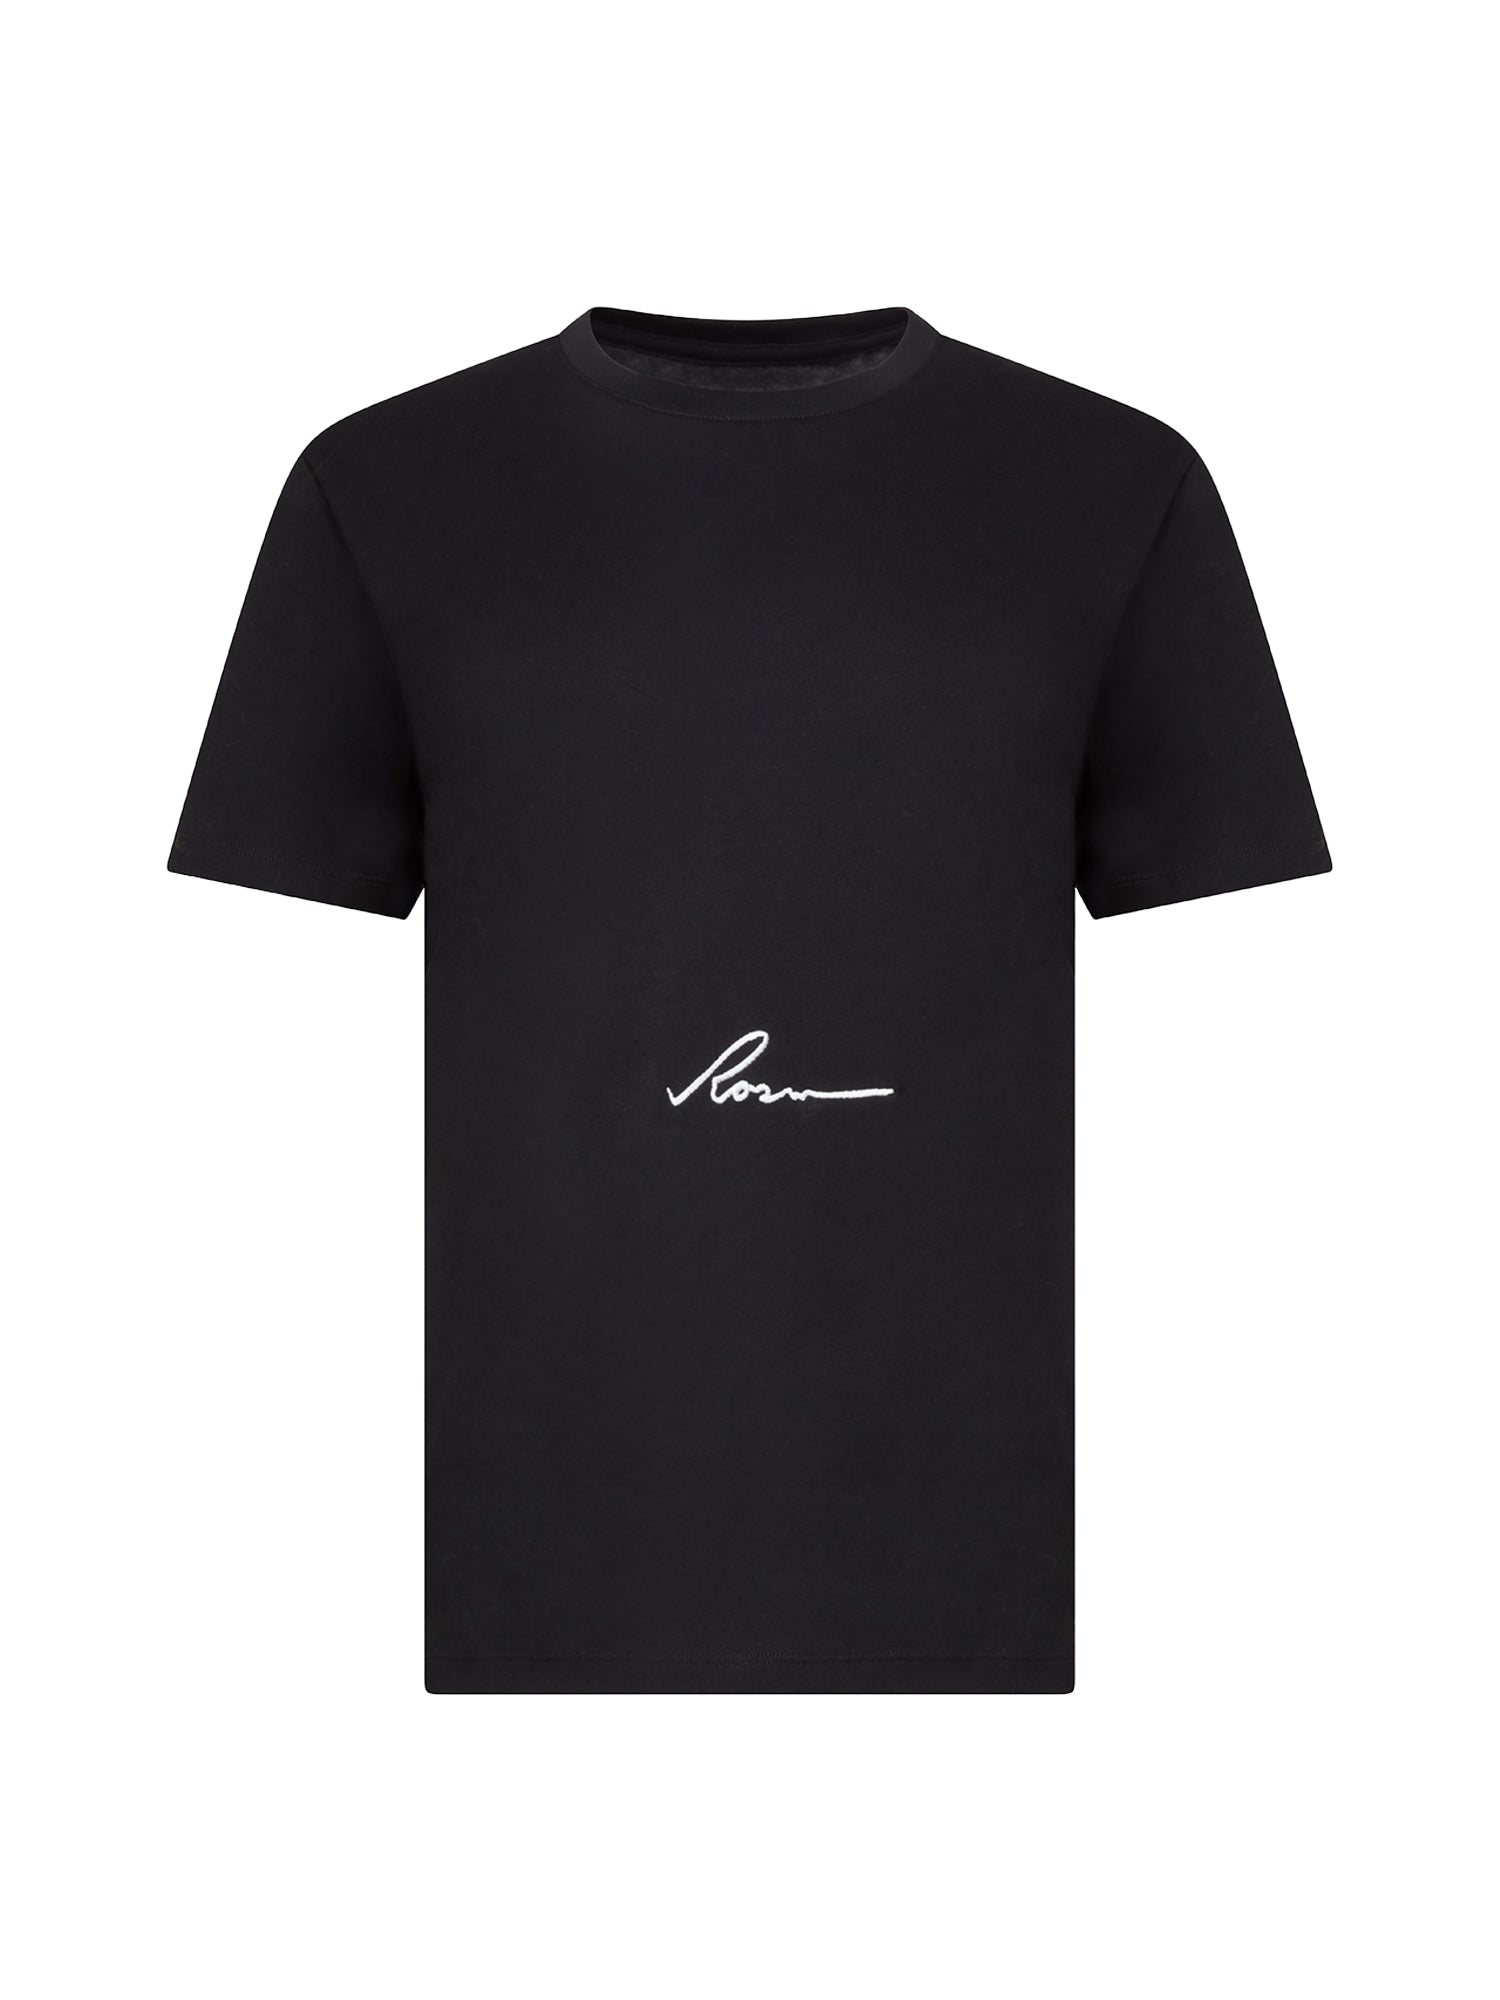 rosin studios black logo embroidered t shirt tee